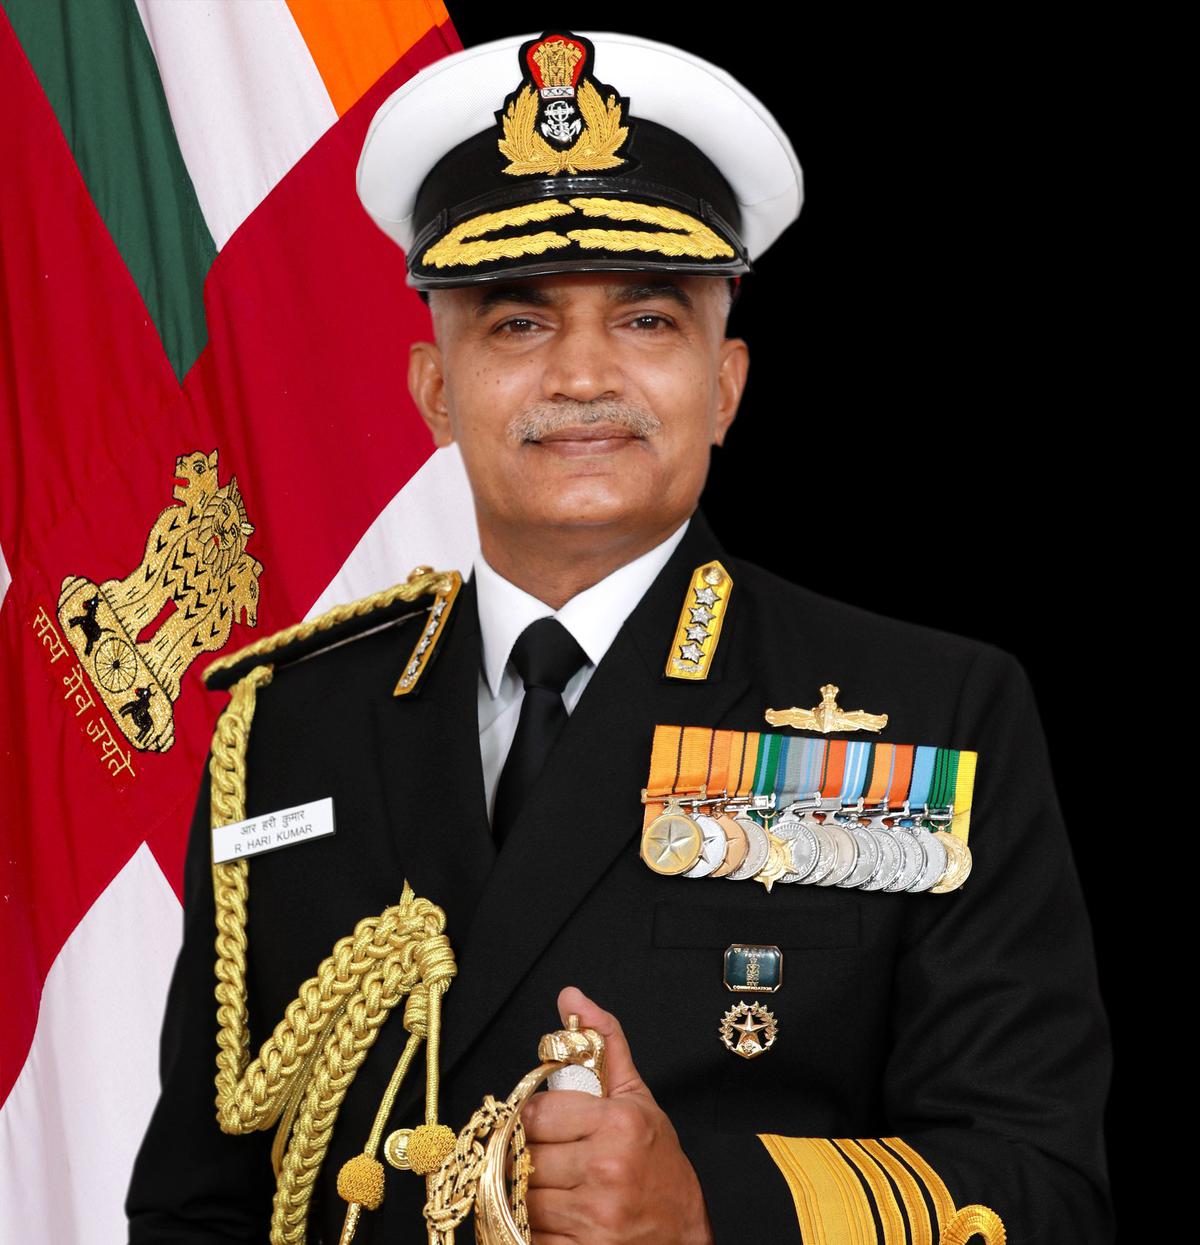 Indian Navy aims to become ‘Aatmanirbhar’ by 2047: Naval Chief Hari Kumar